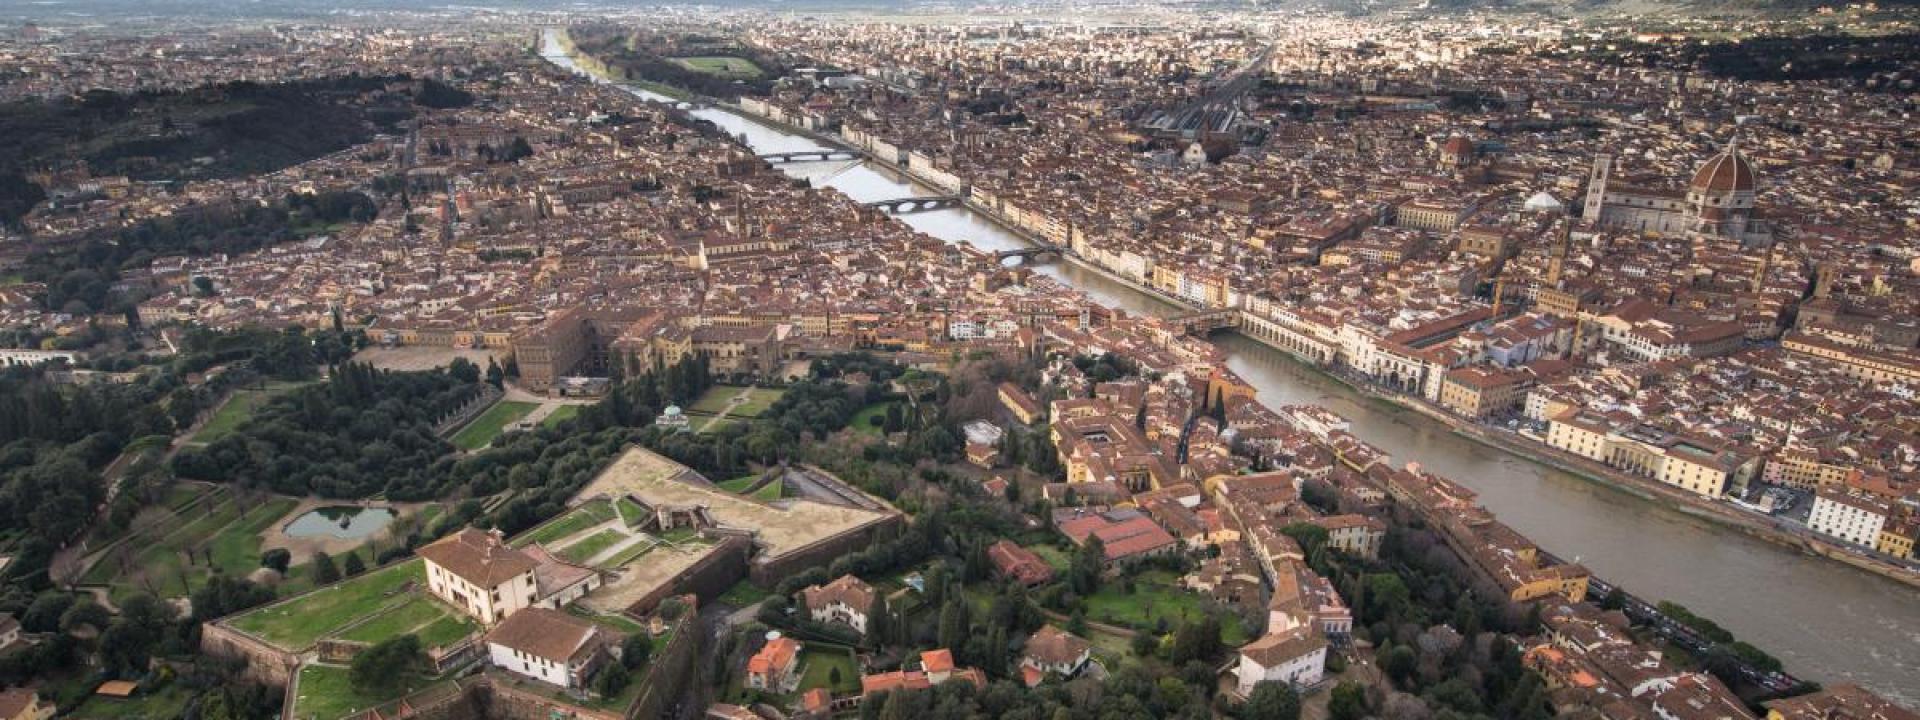 The Metropolitan City of Florence